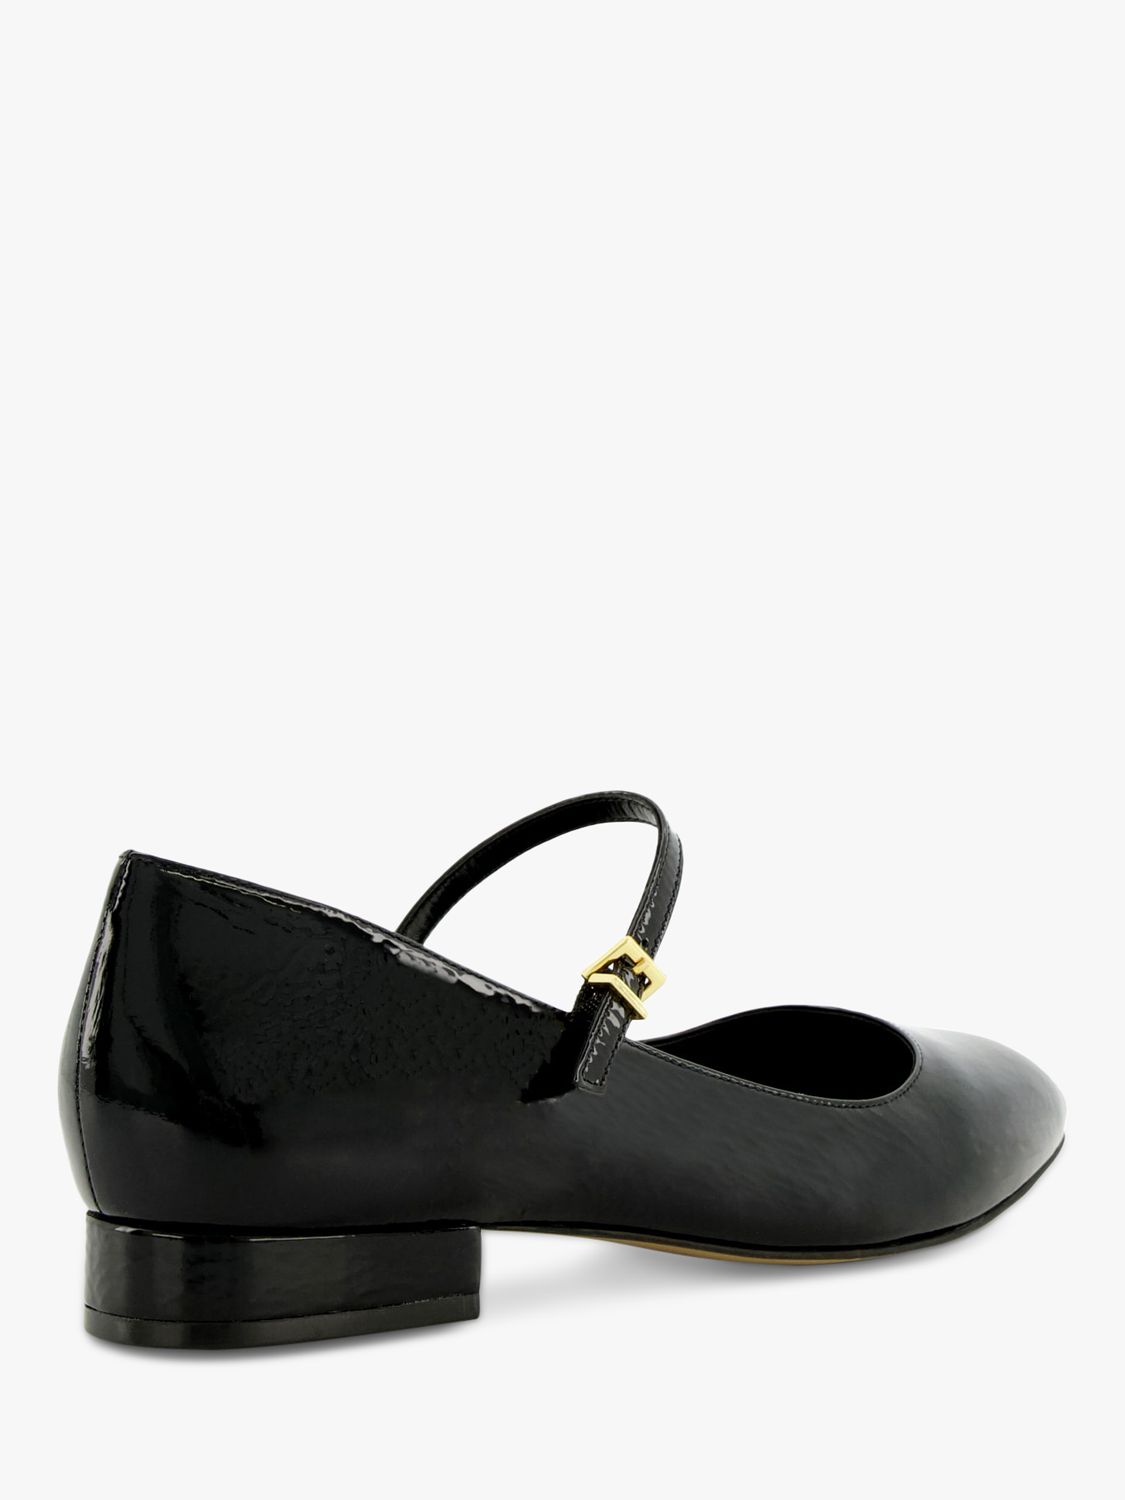 Dune Hipplie Mary Jane Shoes, Black Patent, 3